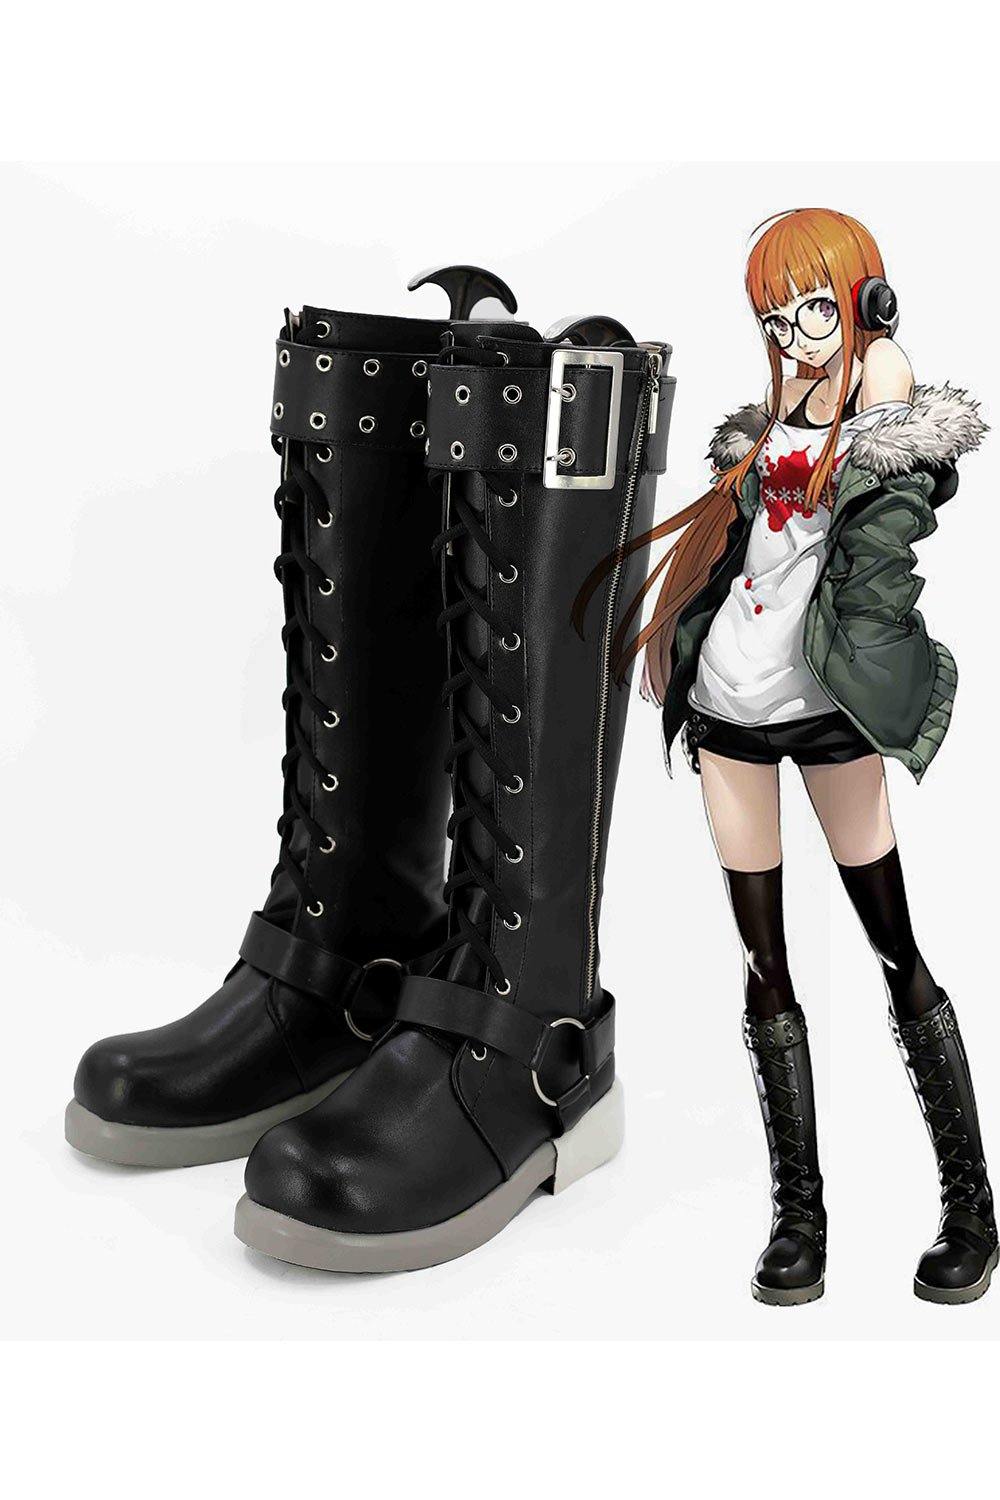 Persona 5 Futaba Sakura Stiefel Cosplay Schuhe - cosplaycartde